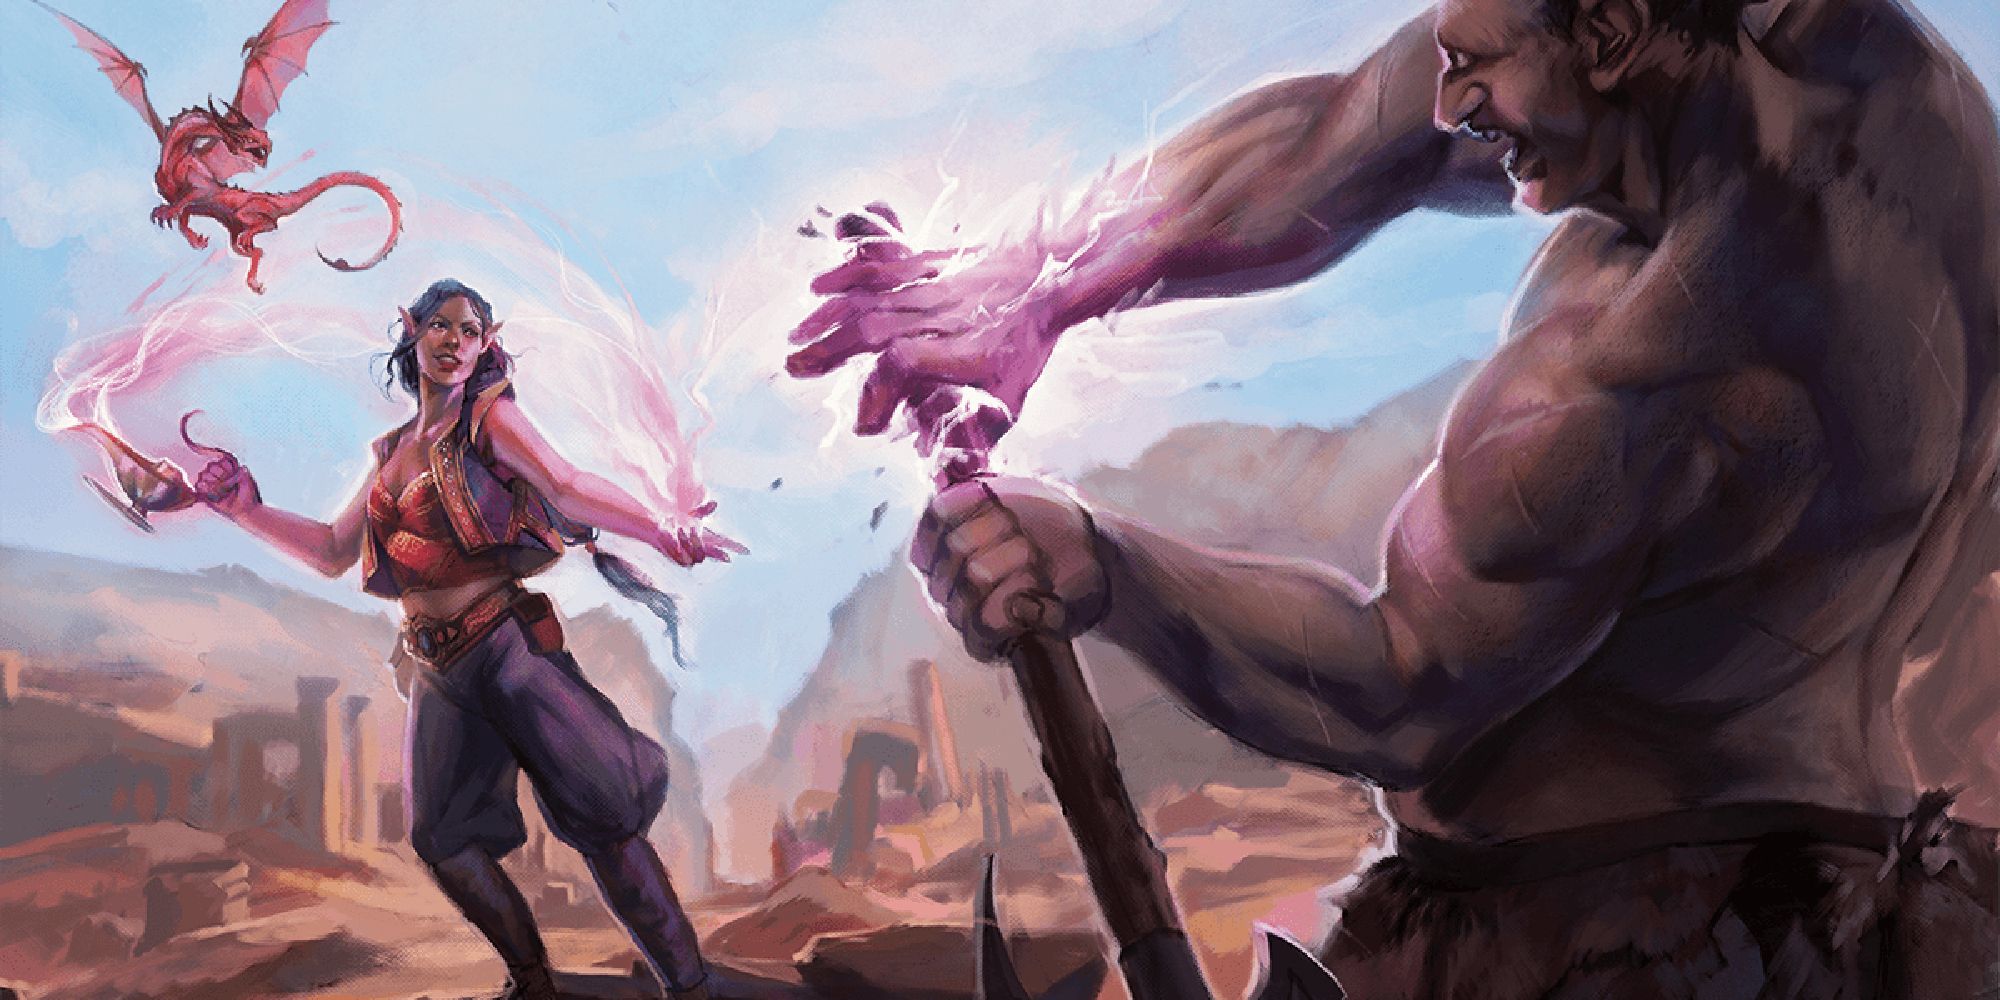 A genie warlock dealing damage to a weapon wielding barbarian. 